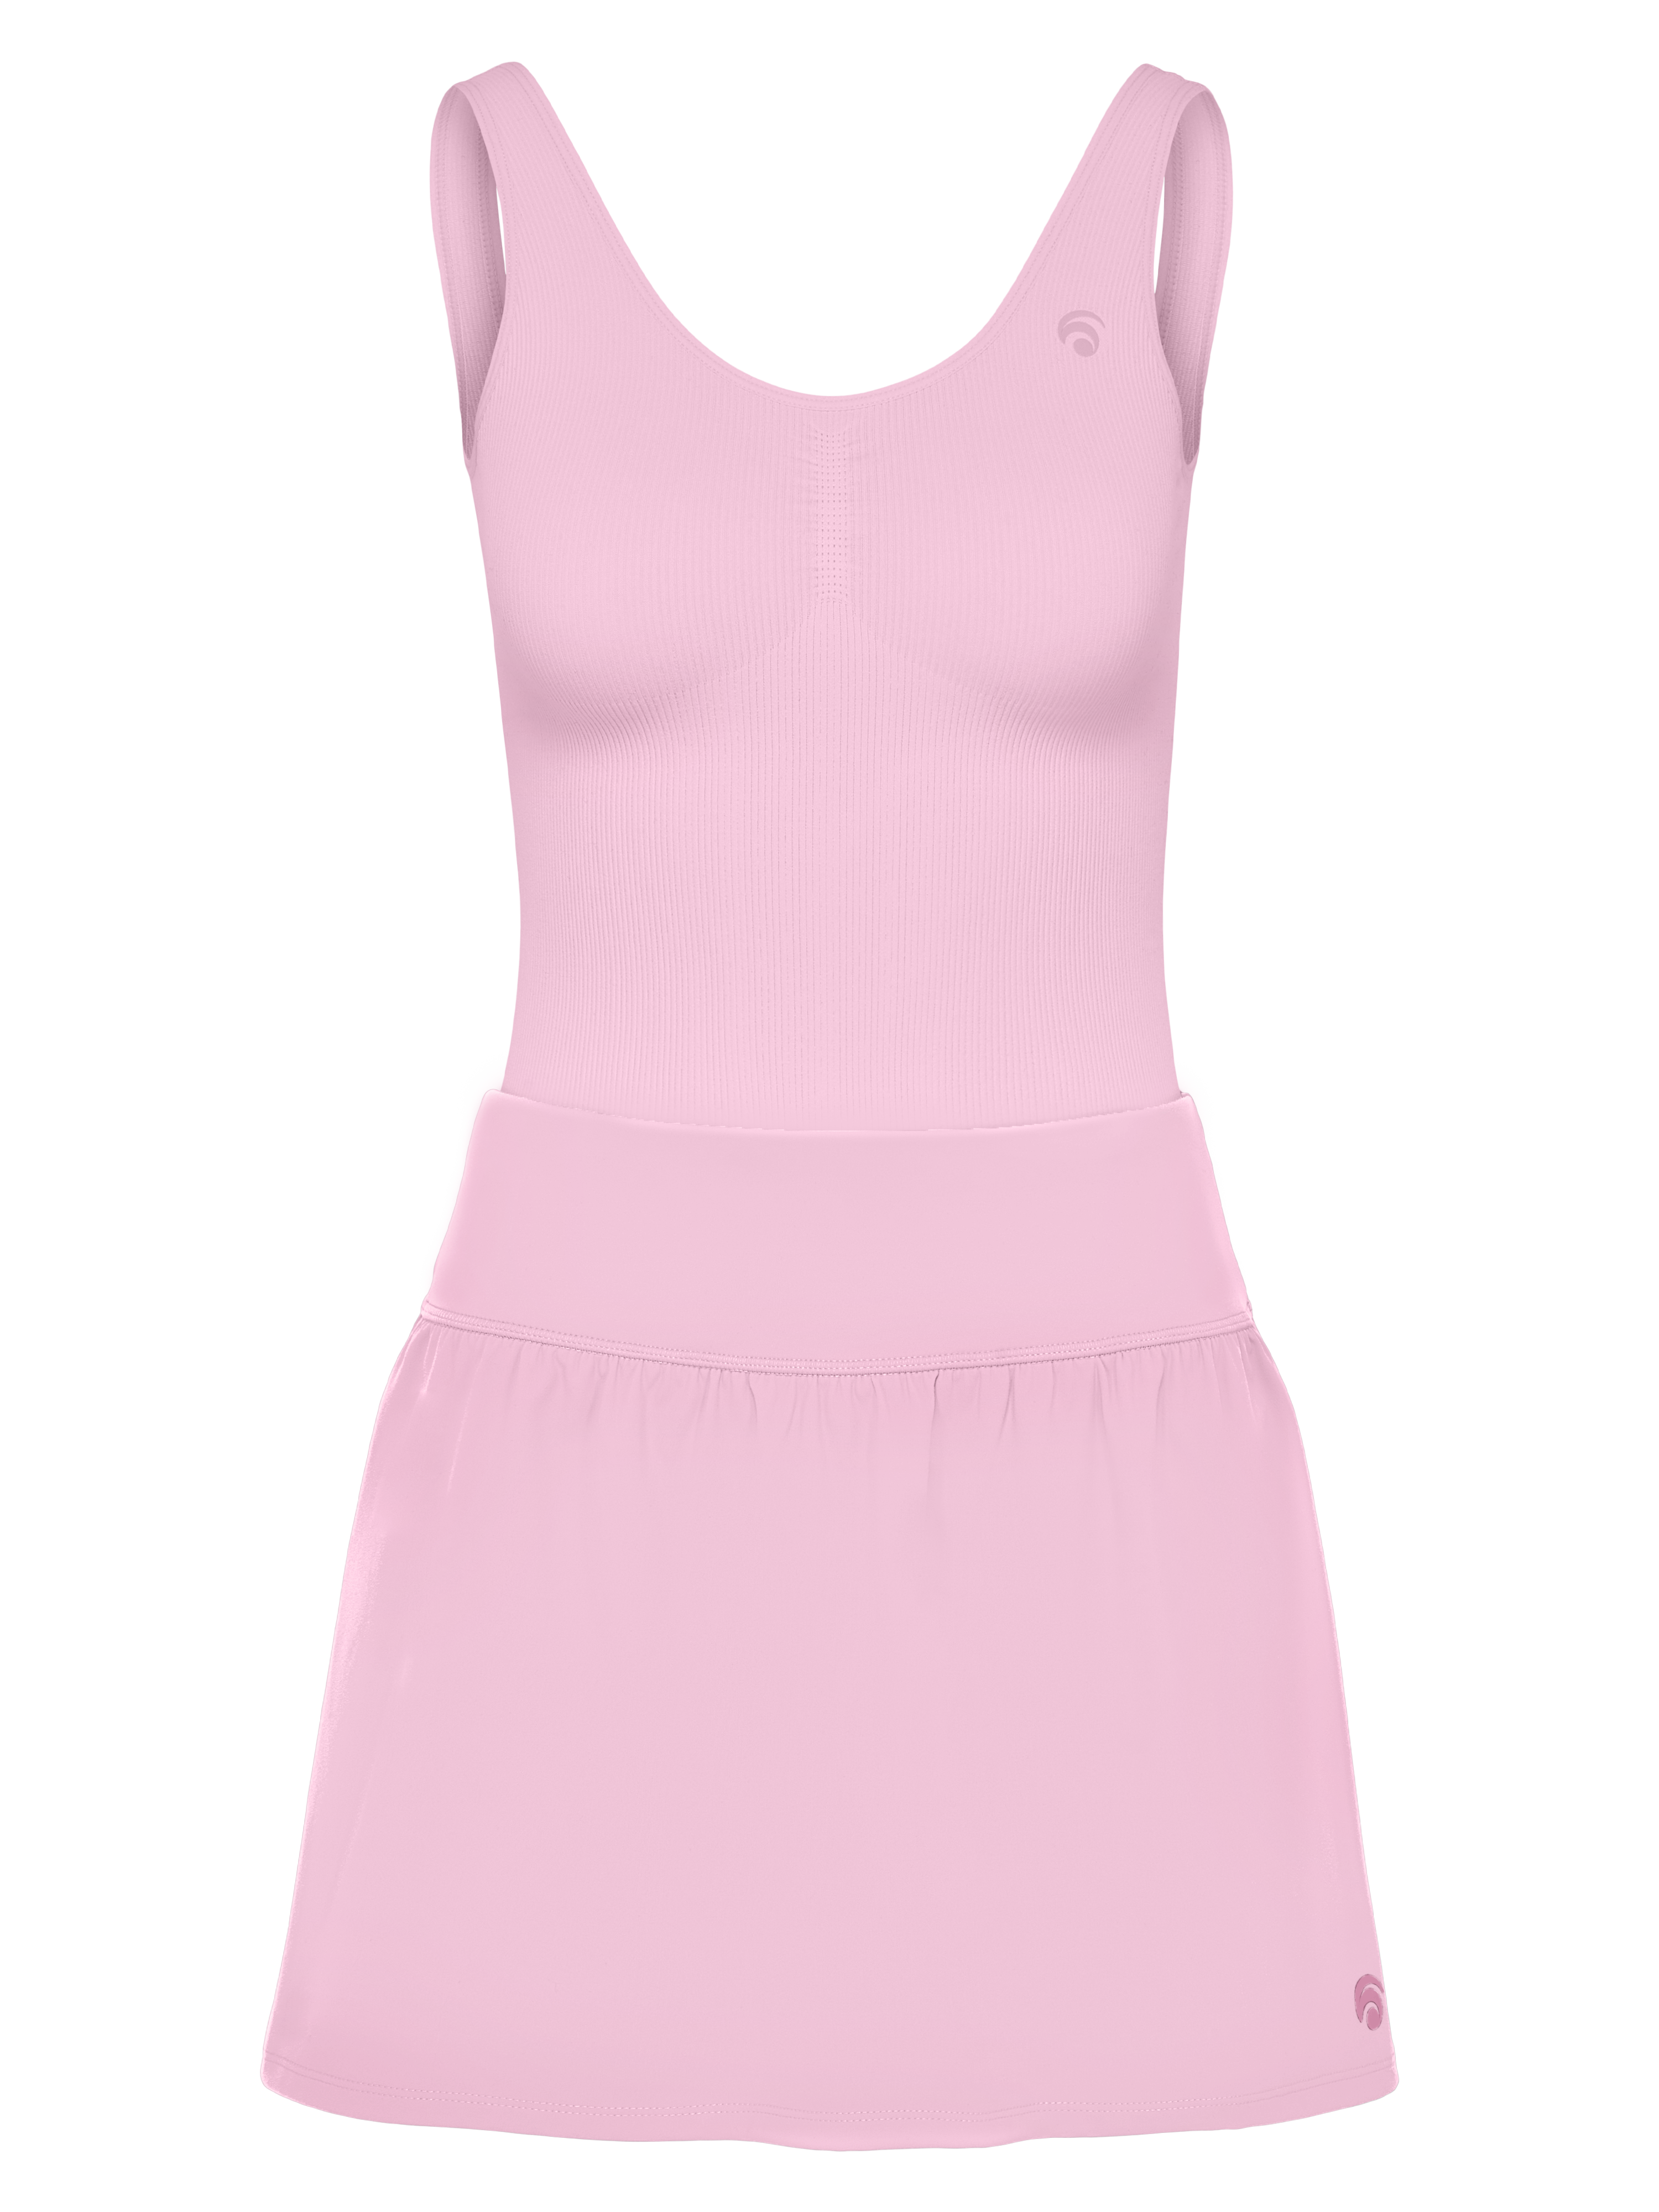 Marina Skirt Body Set - Melrose